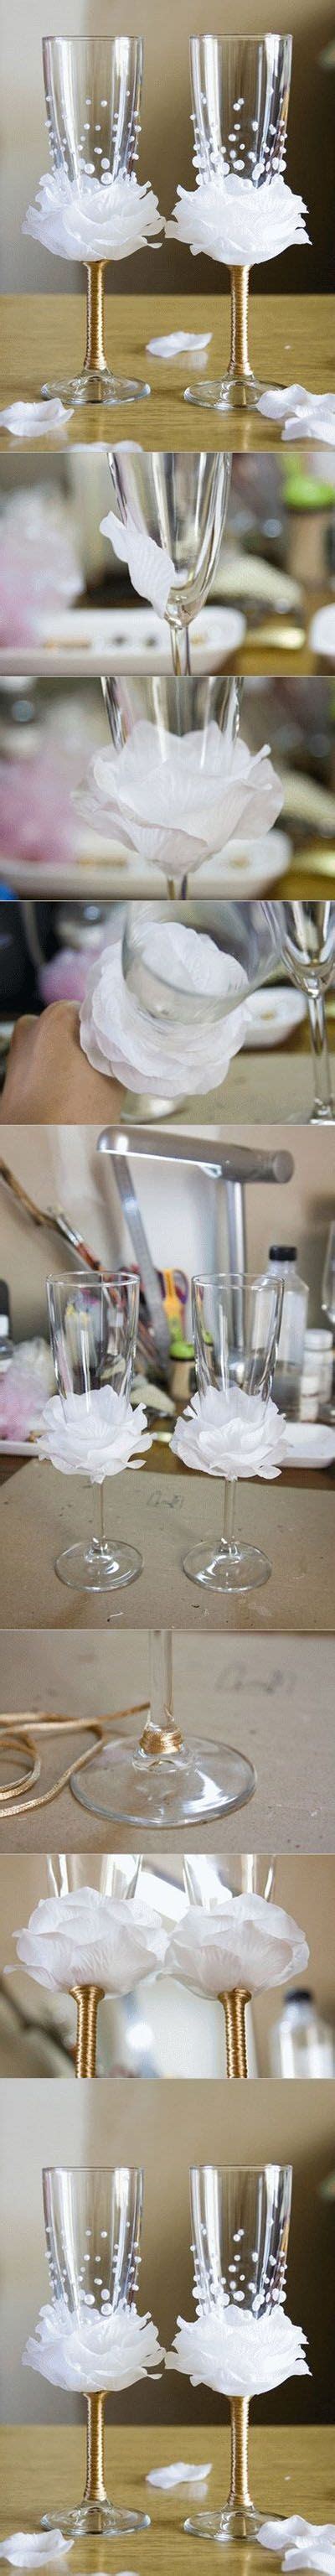 Diy Flower Bead Decorated Wine Glasses Diy And Crafts Tutorials Diy